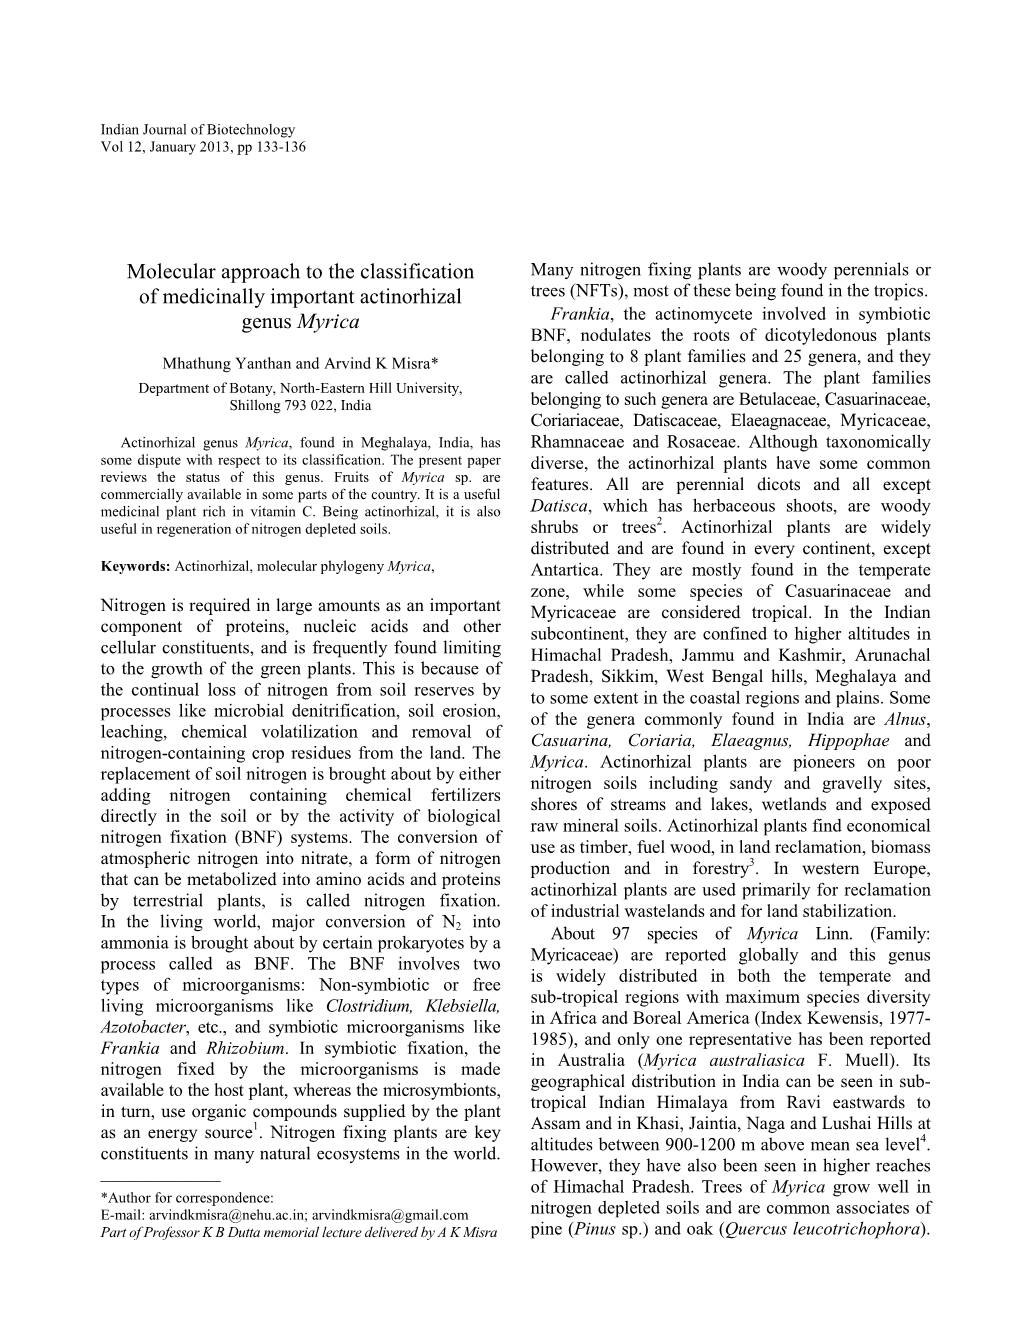 Molecular Approach to the Classification of Medicinally Important Actinorhizal Genus Myrica